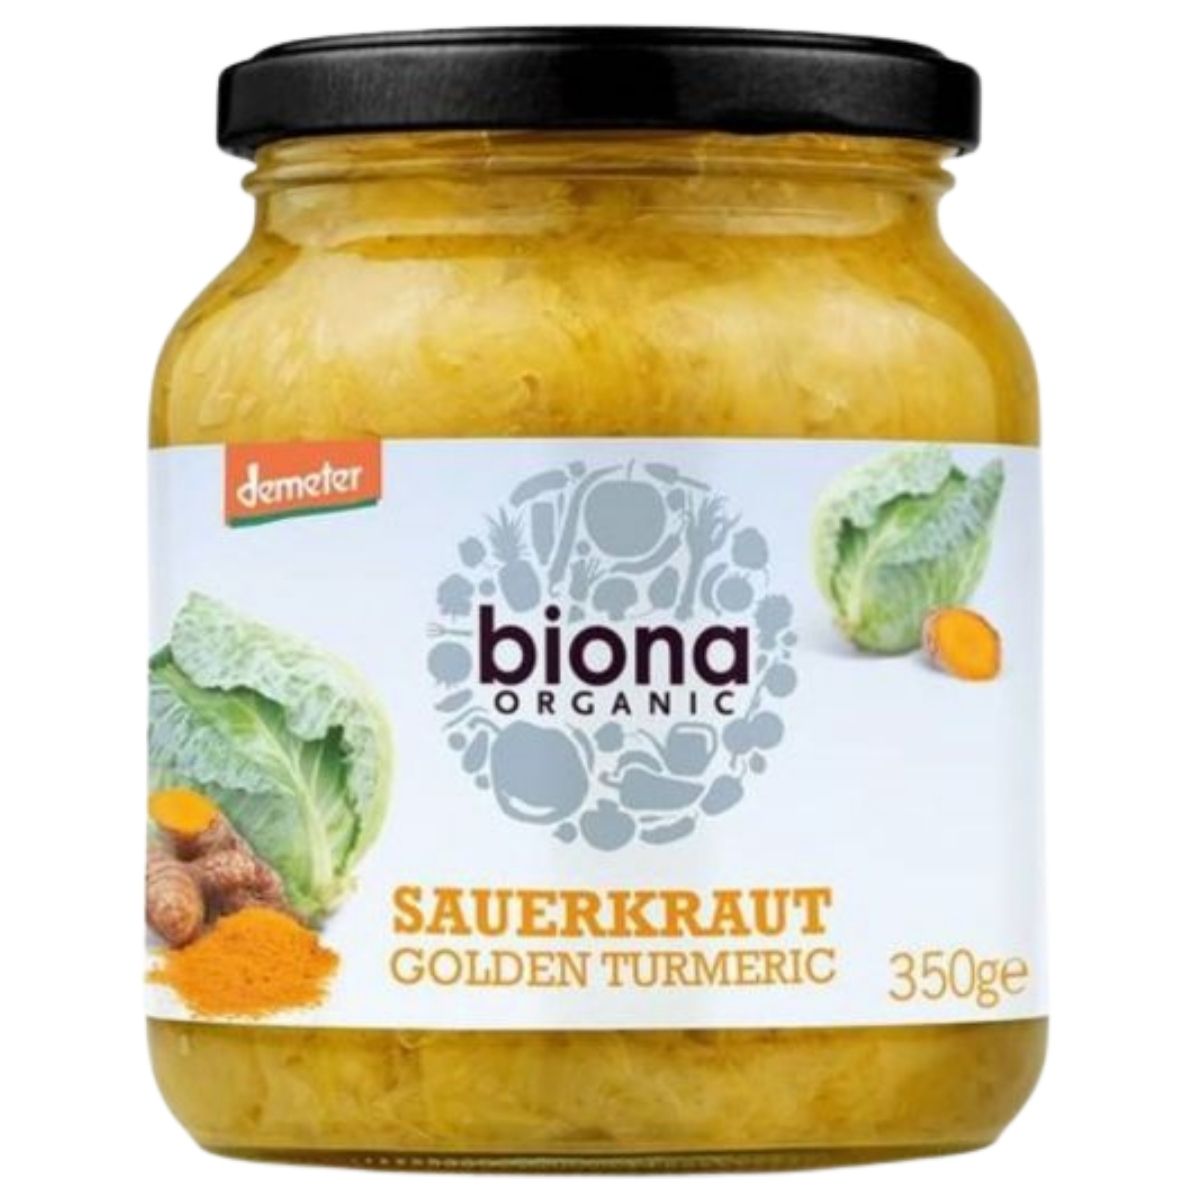 Biona Demeter Sauerkraut Golden Turmeric - 350g